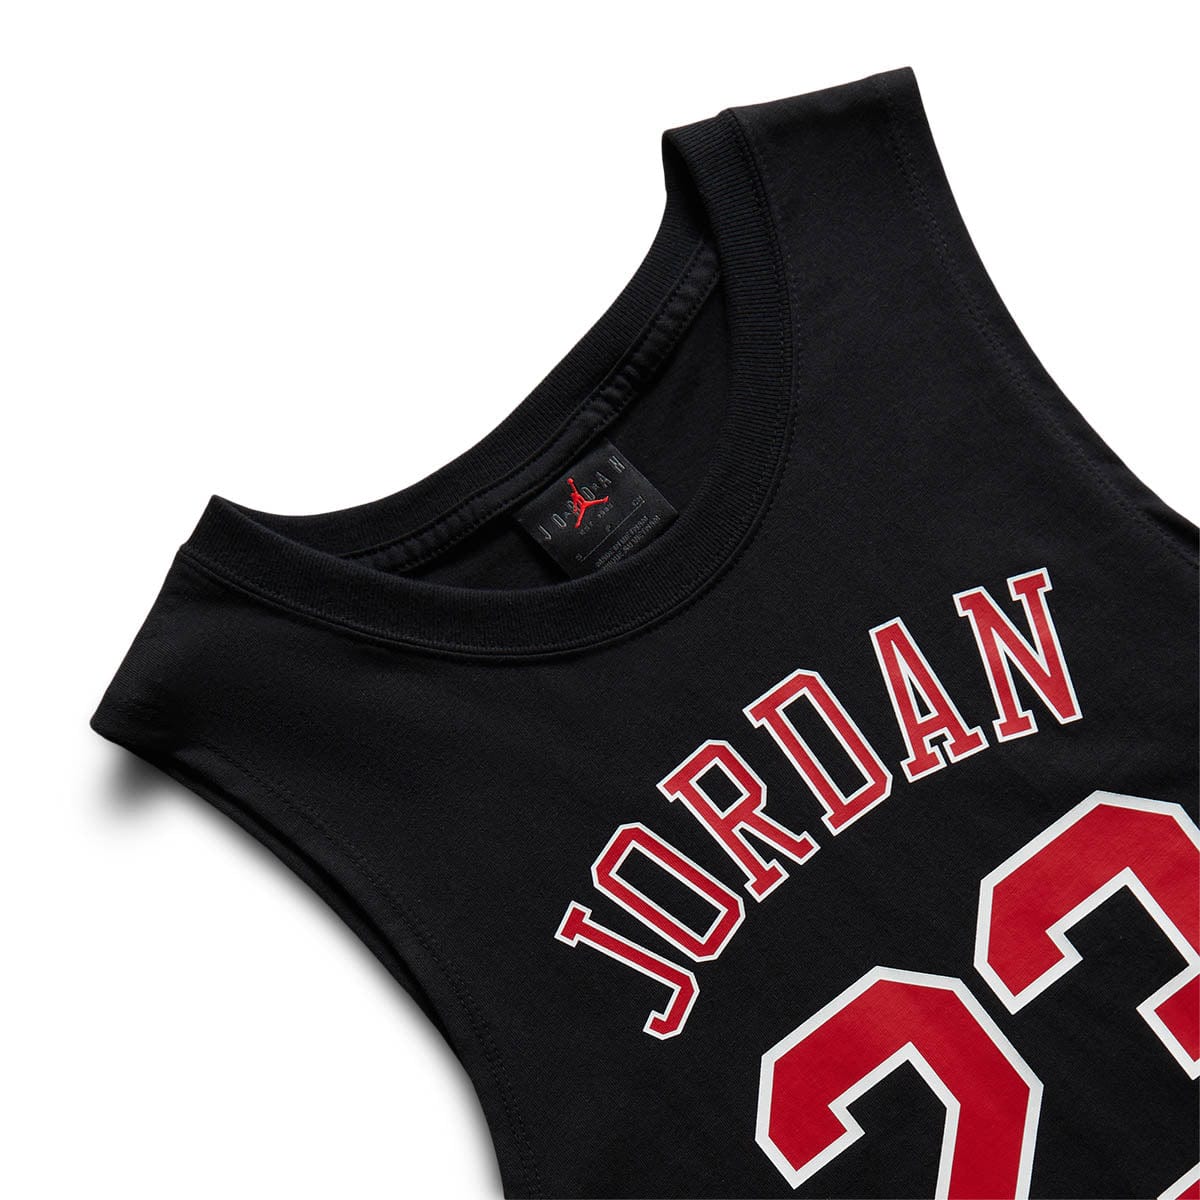 Black Jordan Women's Core Tank Top